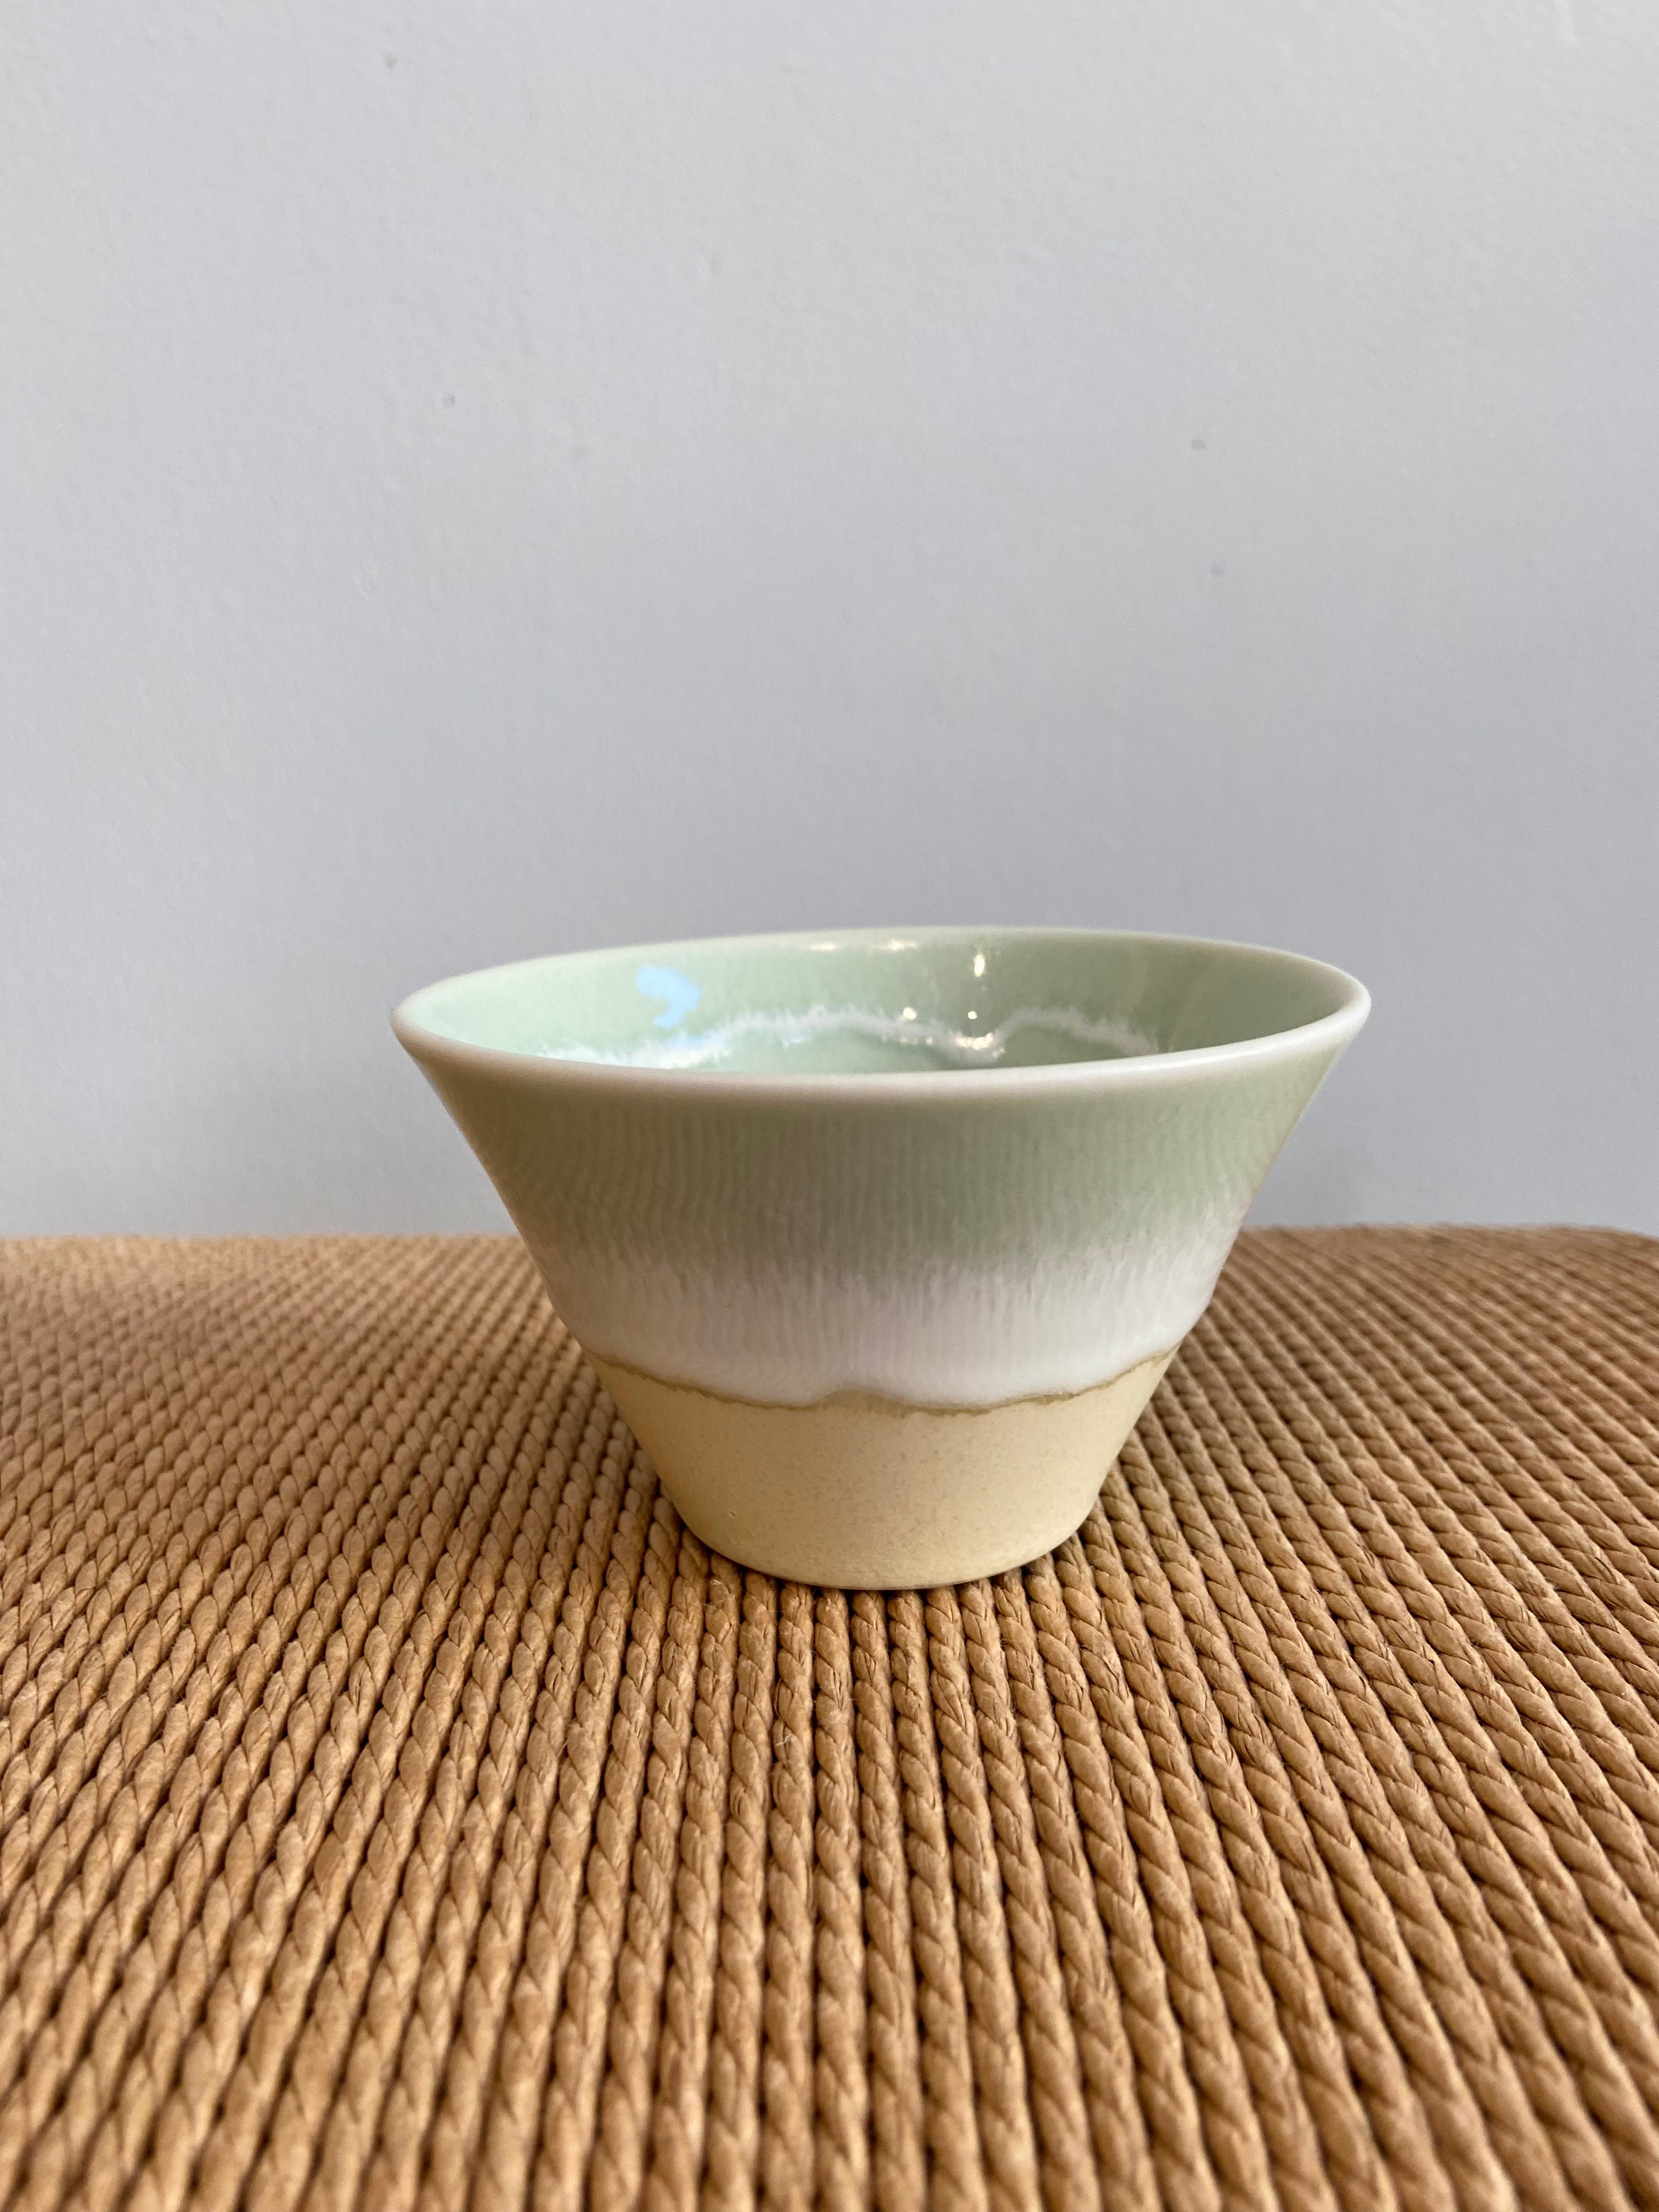 Handmade bowl with mint green glaze